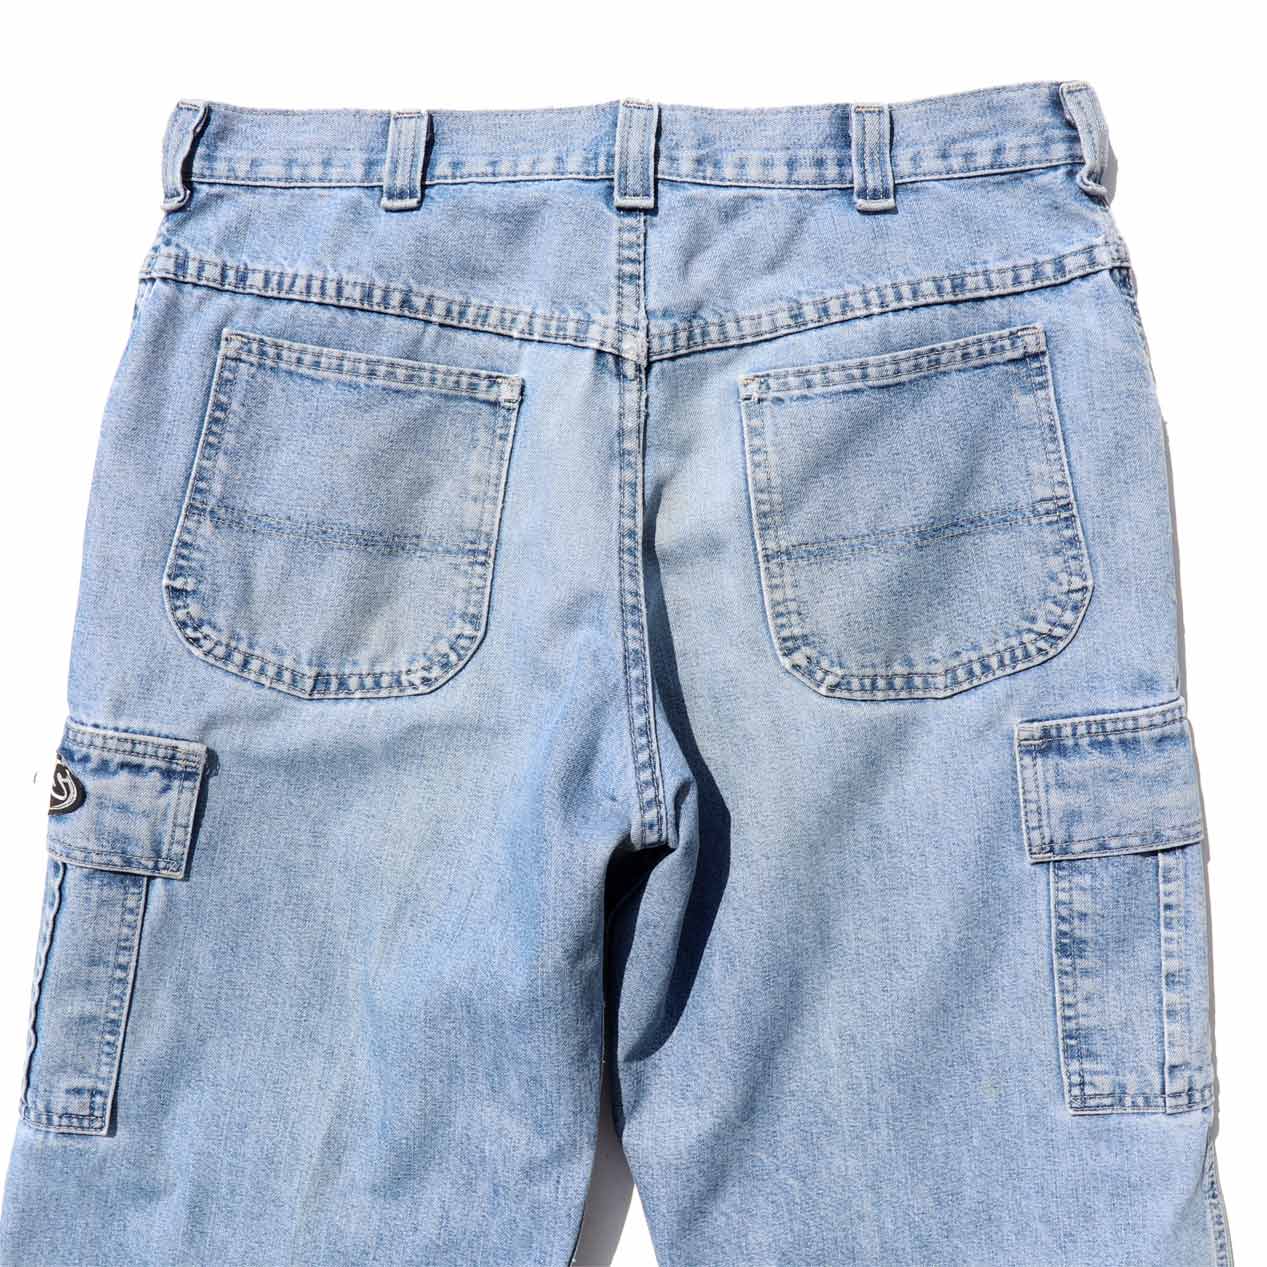 POST JUNK  90s LEE PIPES 6 Pocket Denim Pants About W36